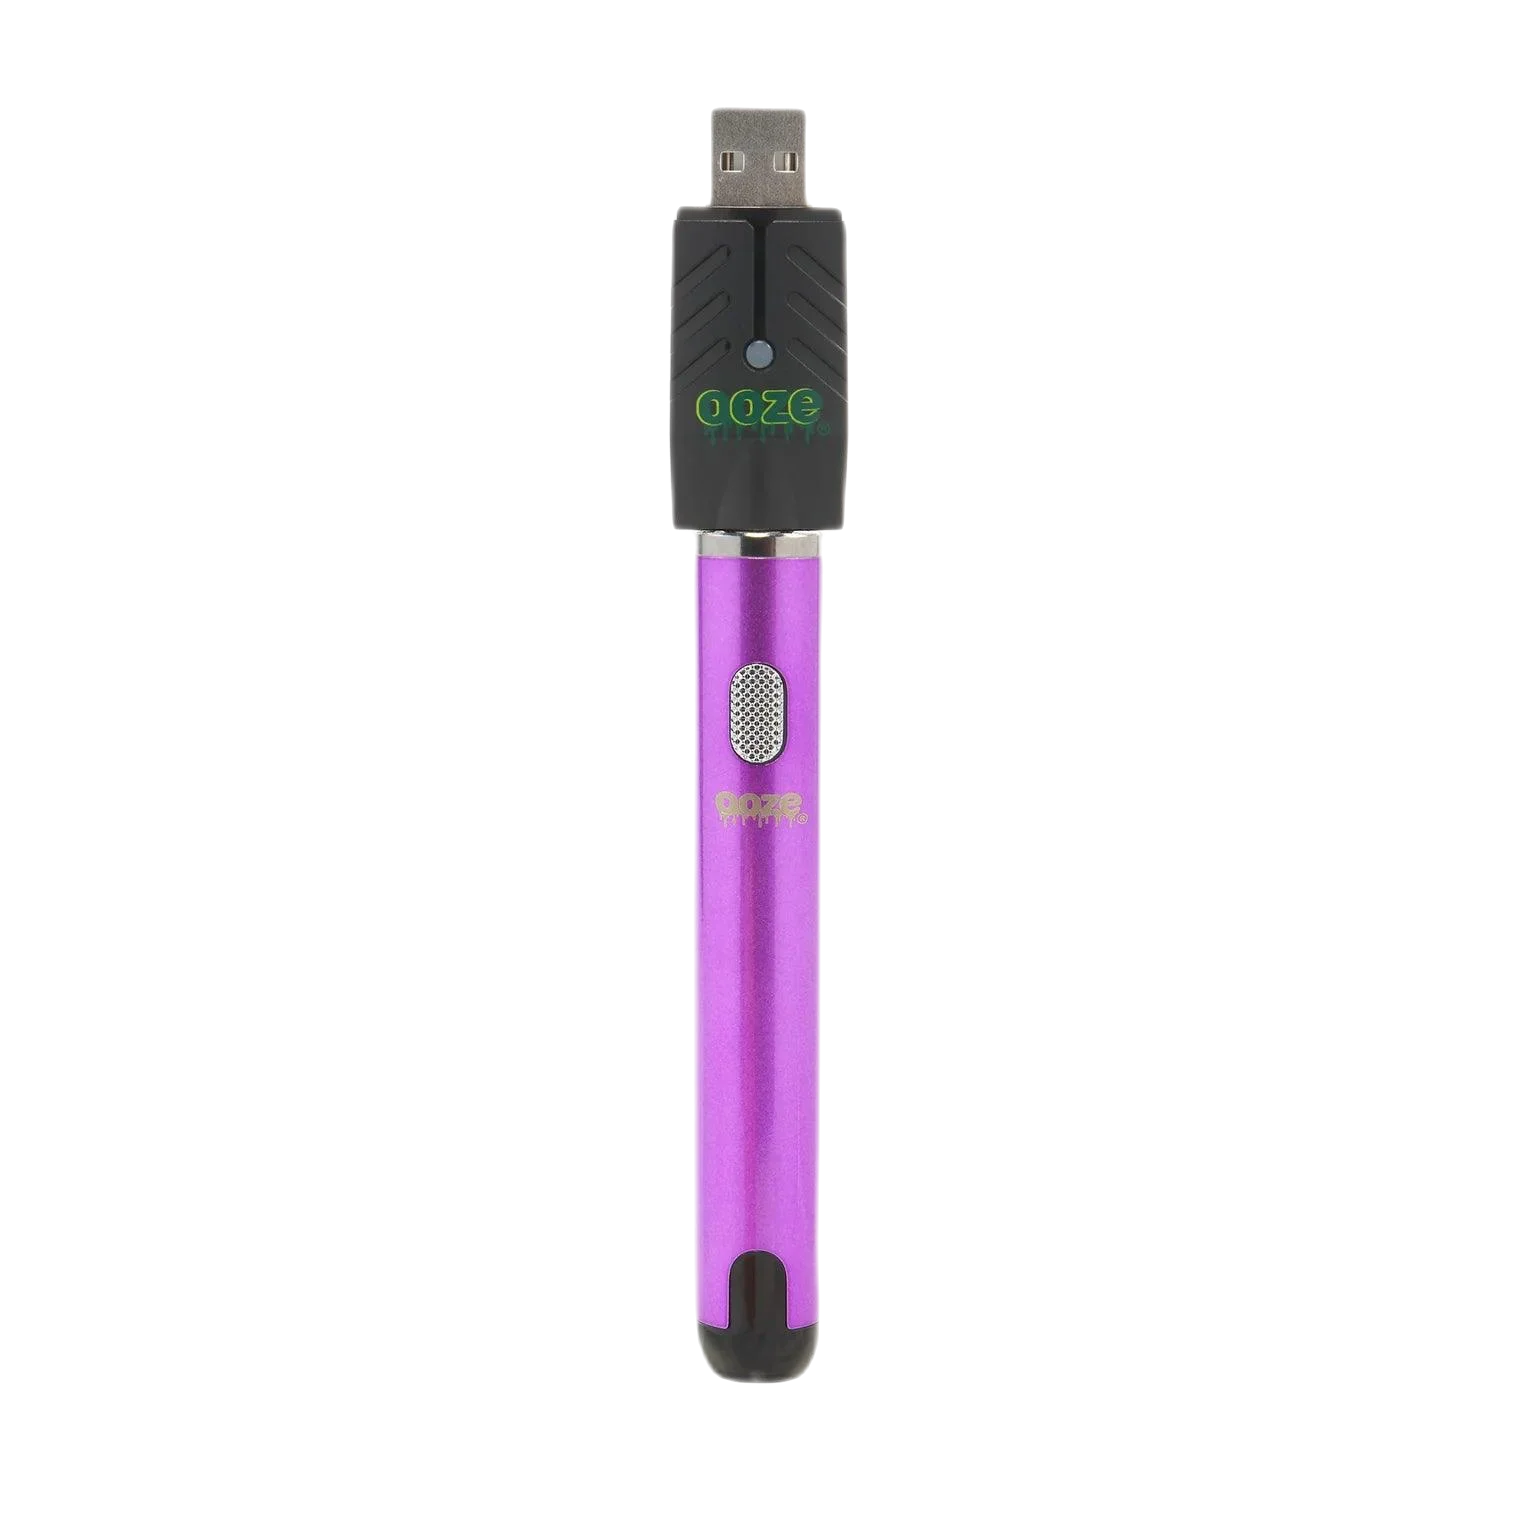 Ooze Smart Battery Vape Pen - 650 mAh - Coastal Hemp Co